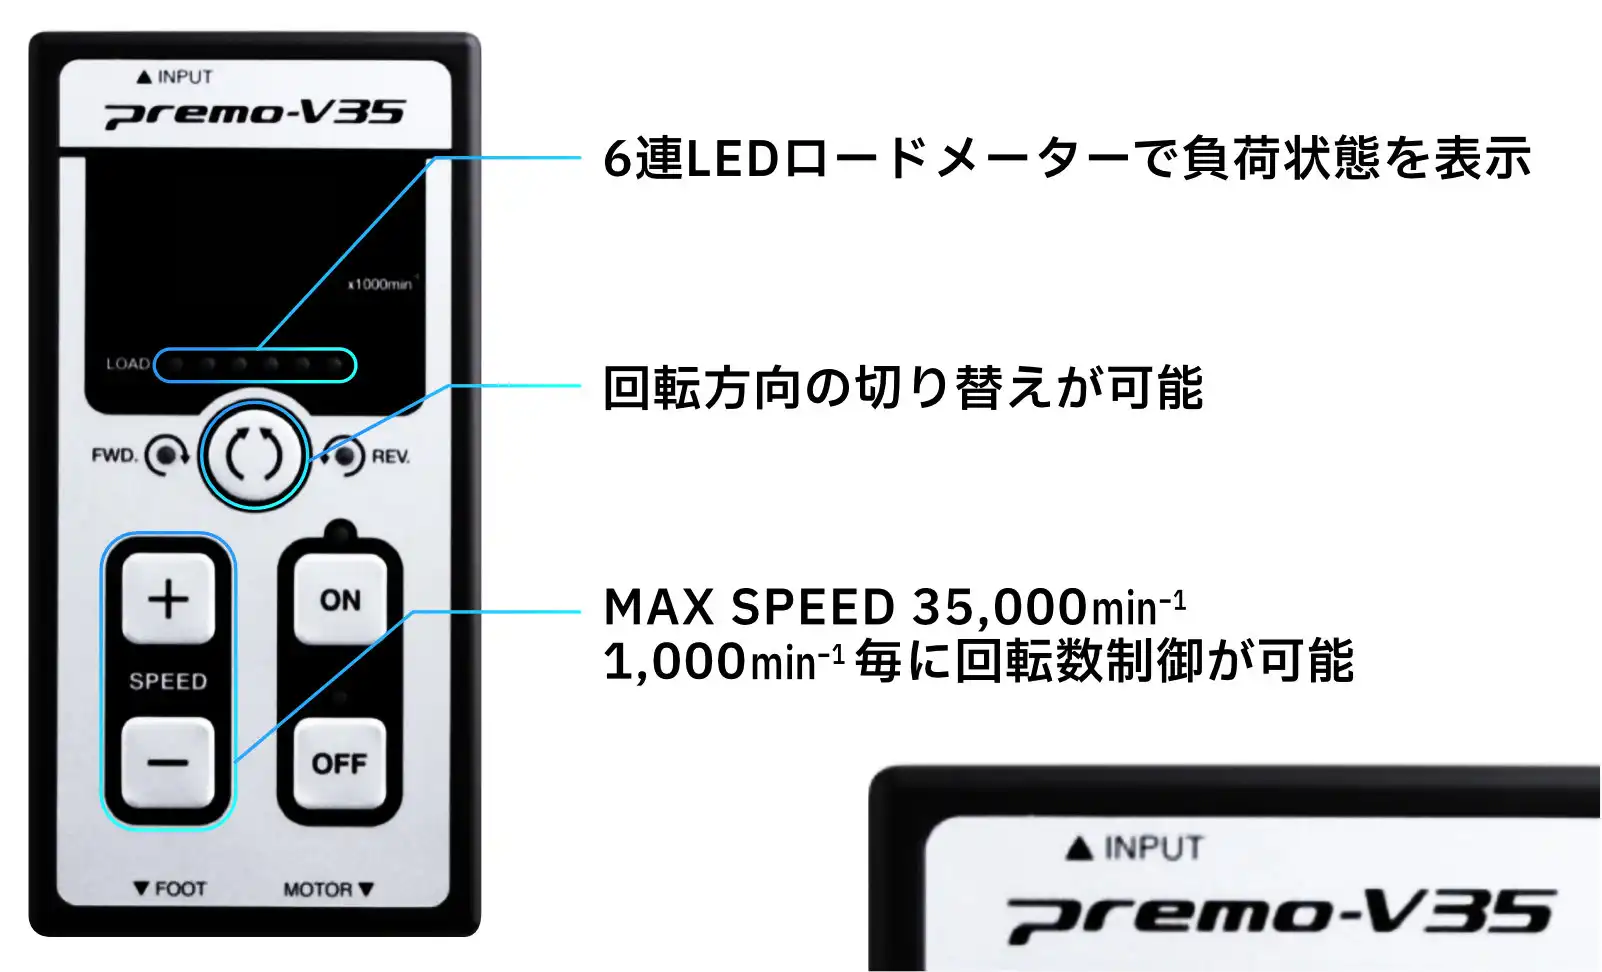 premo v35 6連LEDロードメーターで負荷状態を表示 回転方向の切り替えが可能 MAX SPEED 35000min-1 1000min-1毎に回転数制御が可能